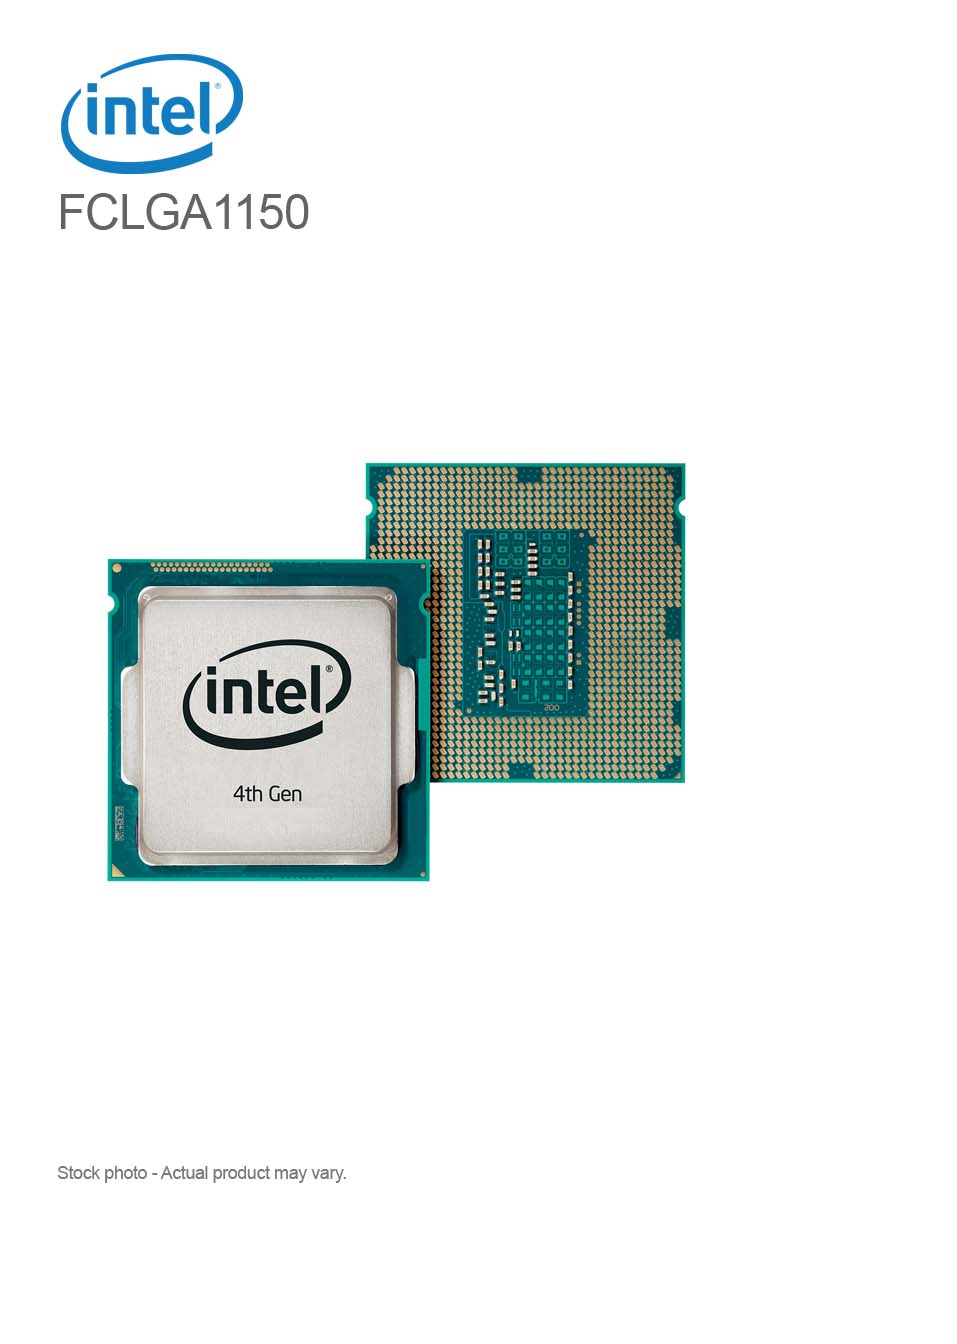 4130 сокет. Fclga1150. Core i5 4570s характеристики Intel. Fclga1151. Fclga1150 самый мощный процессор.